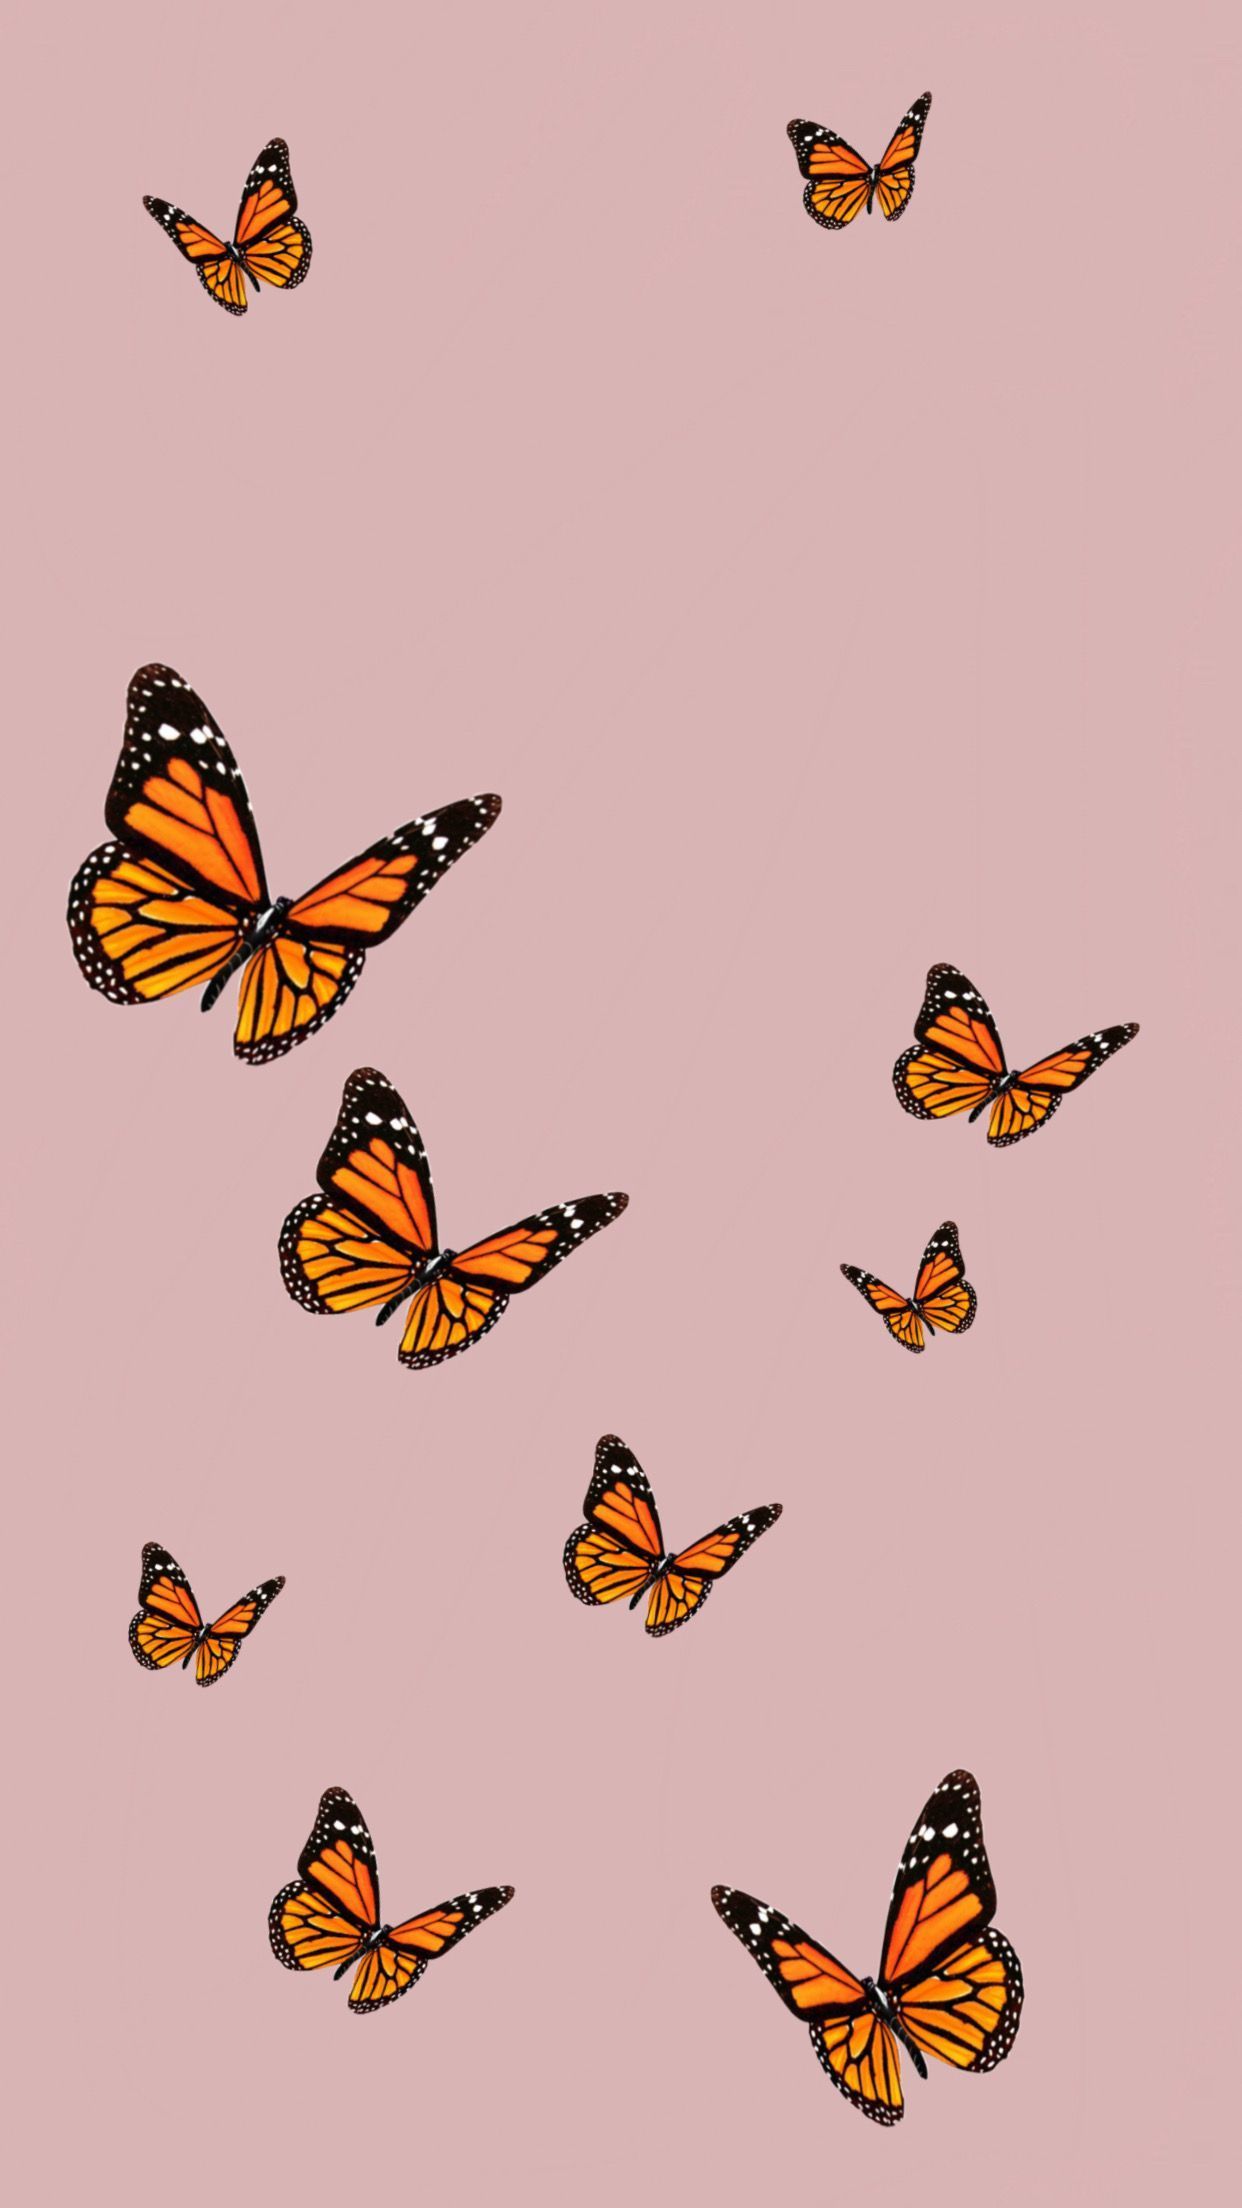 aesthetics. Butterfly wallpaper iphone